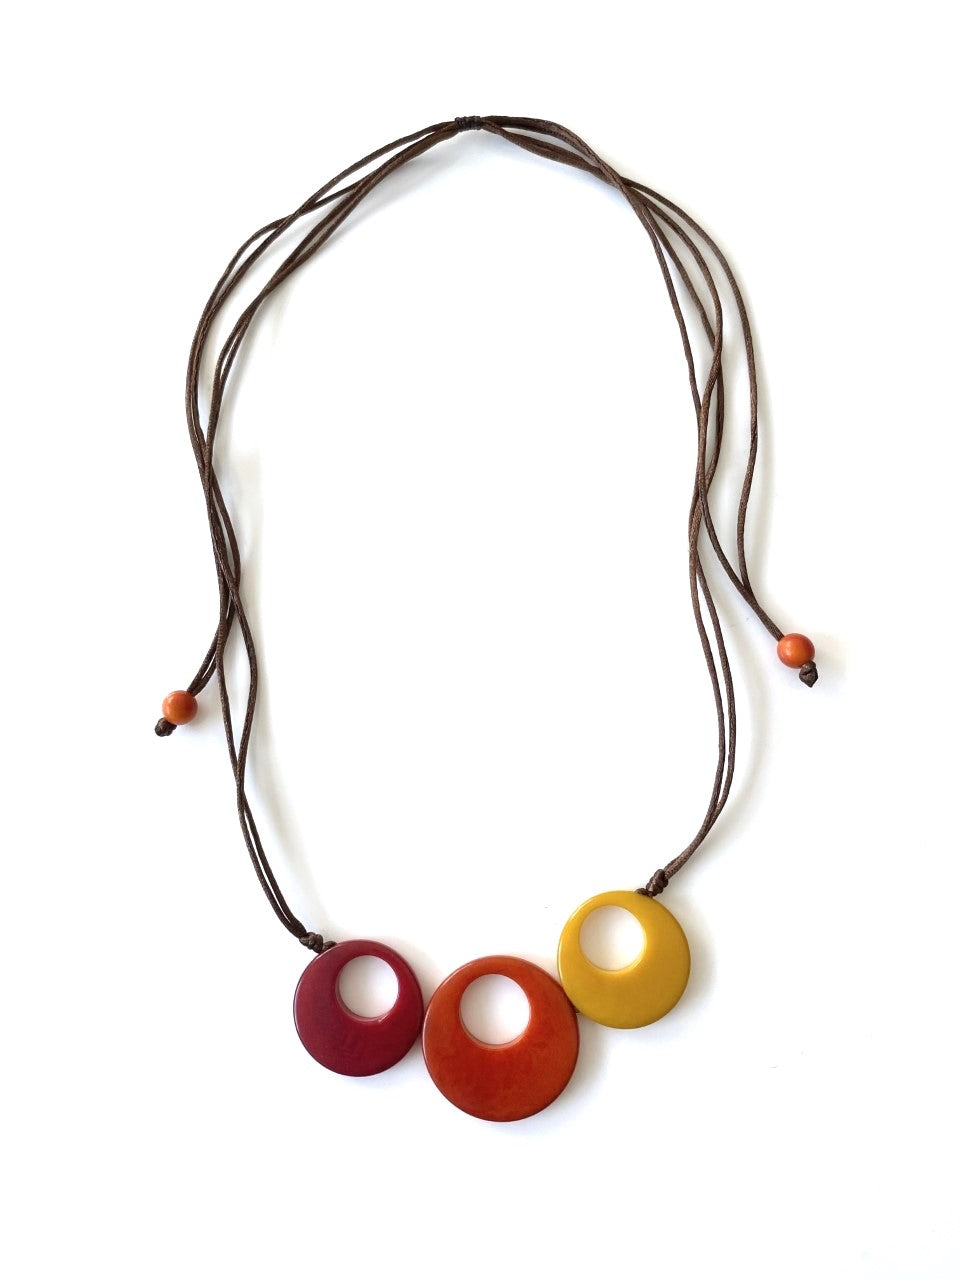 Treslunas necklace - Red, Orange & Mustard